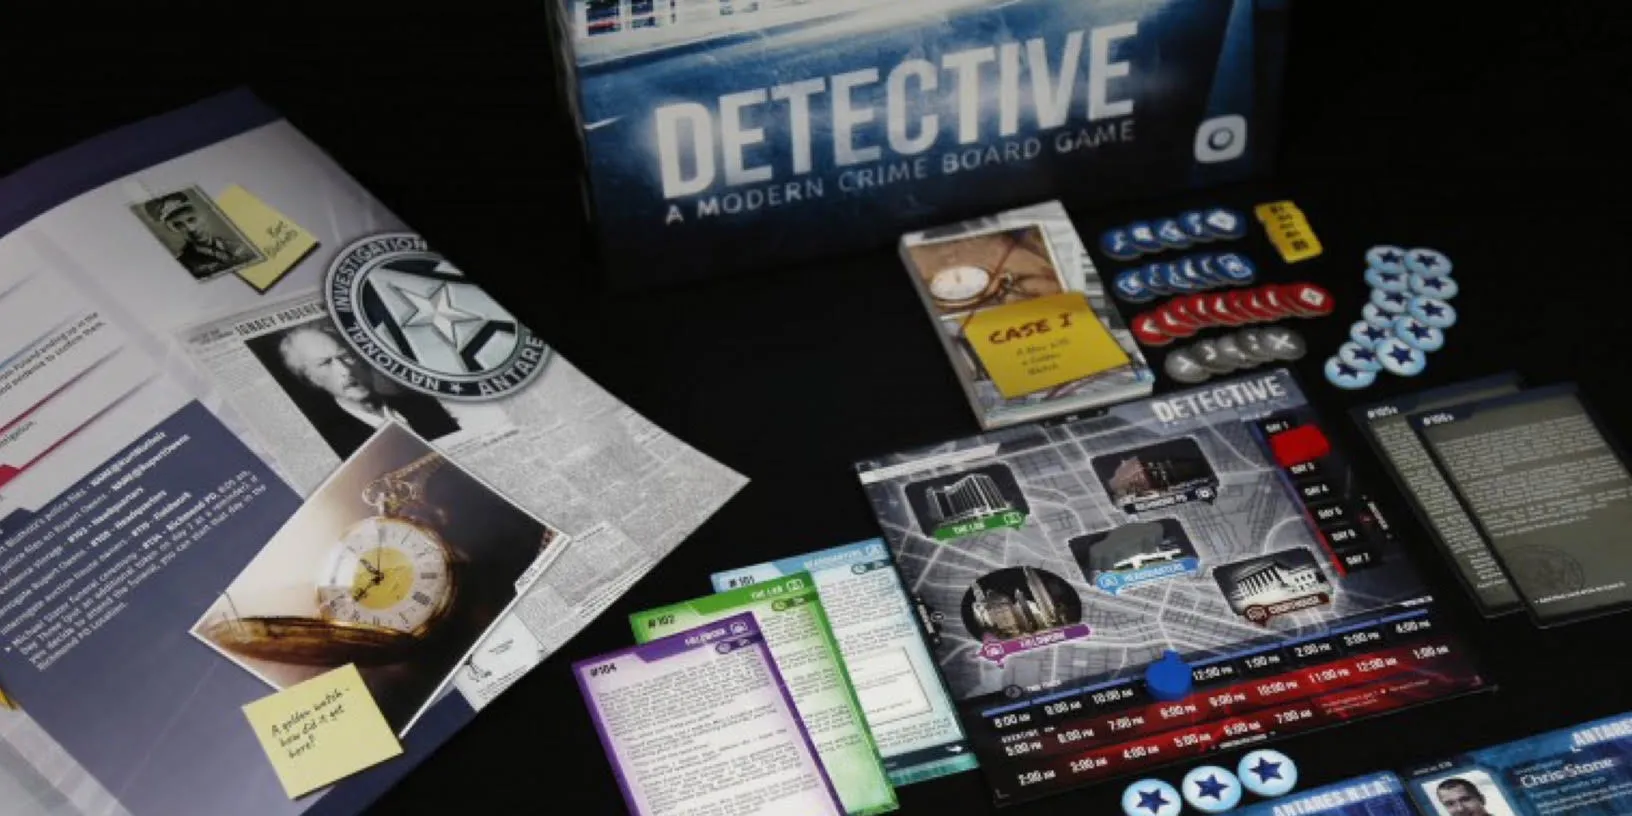 Detective: A Modern Crime Board Game set